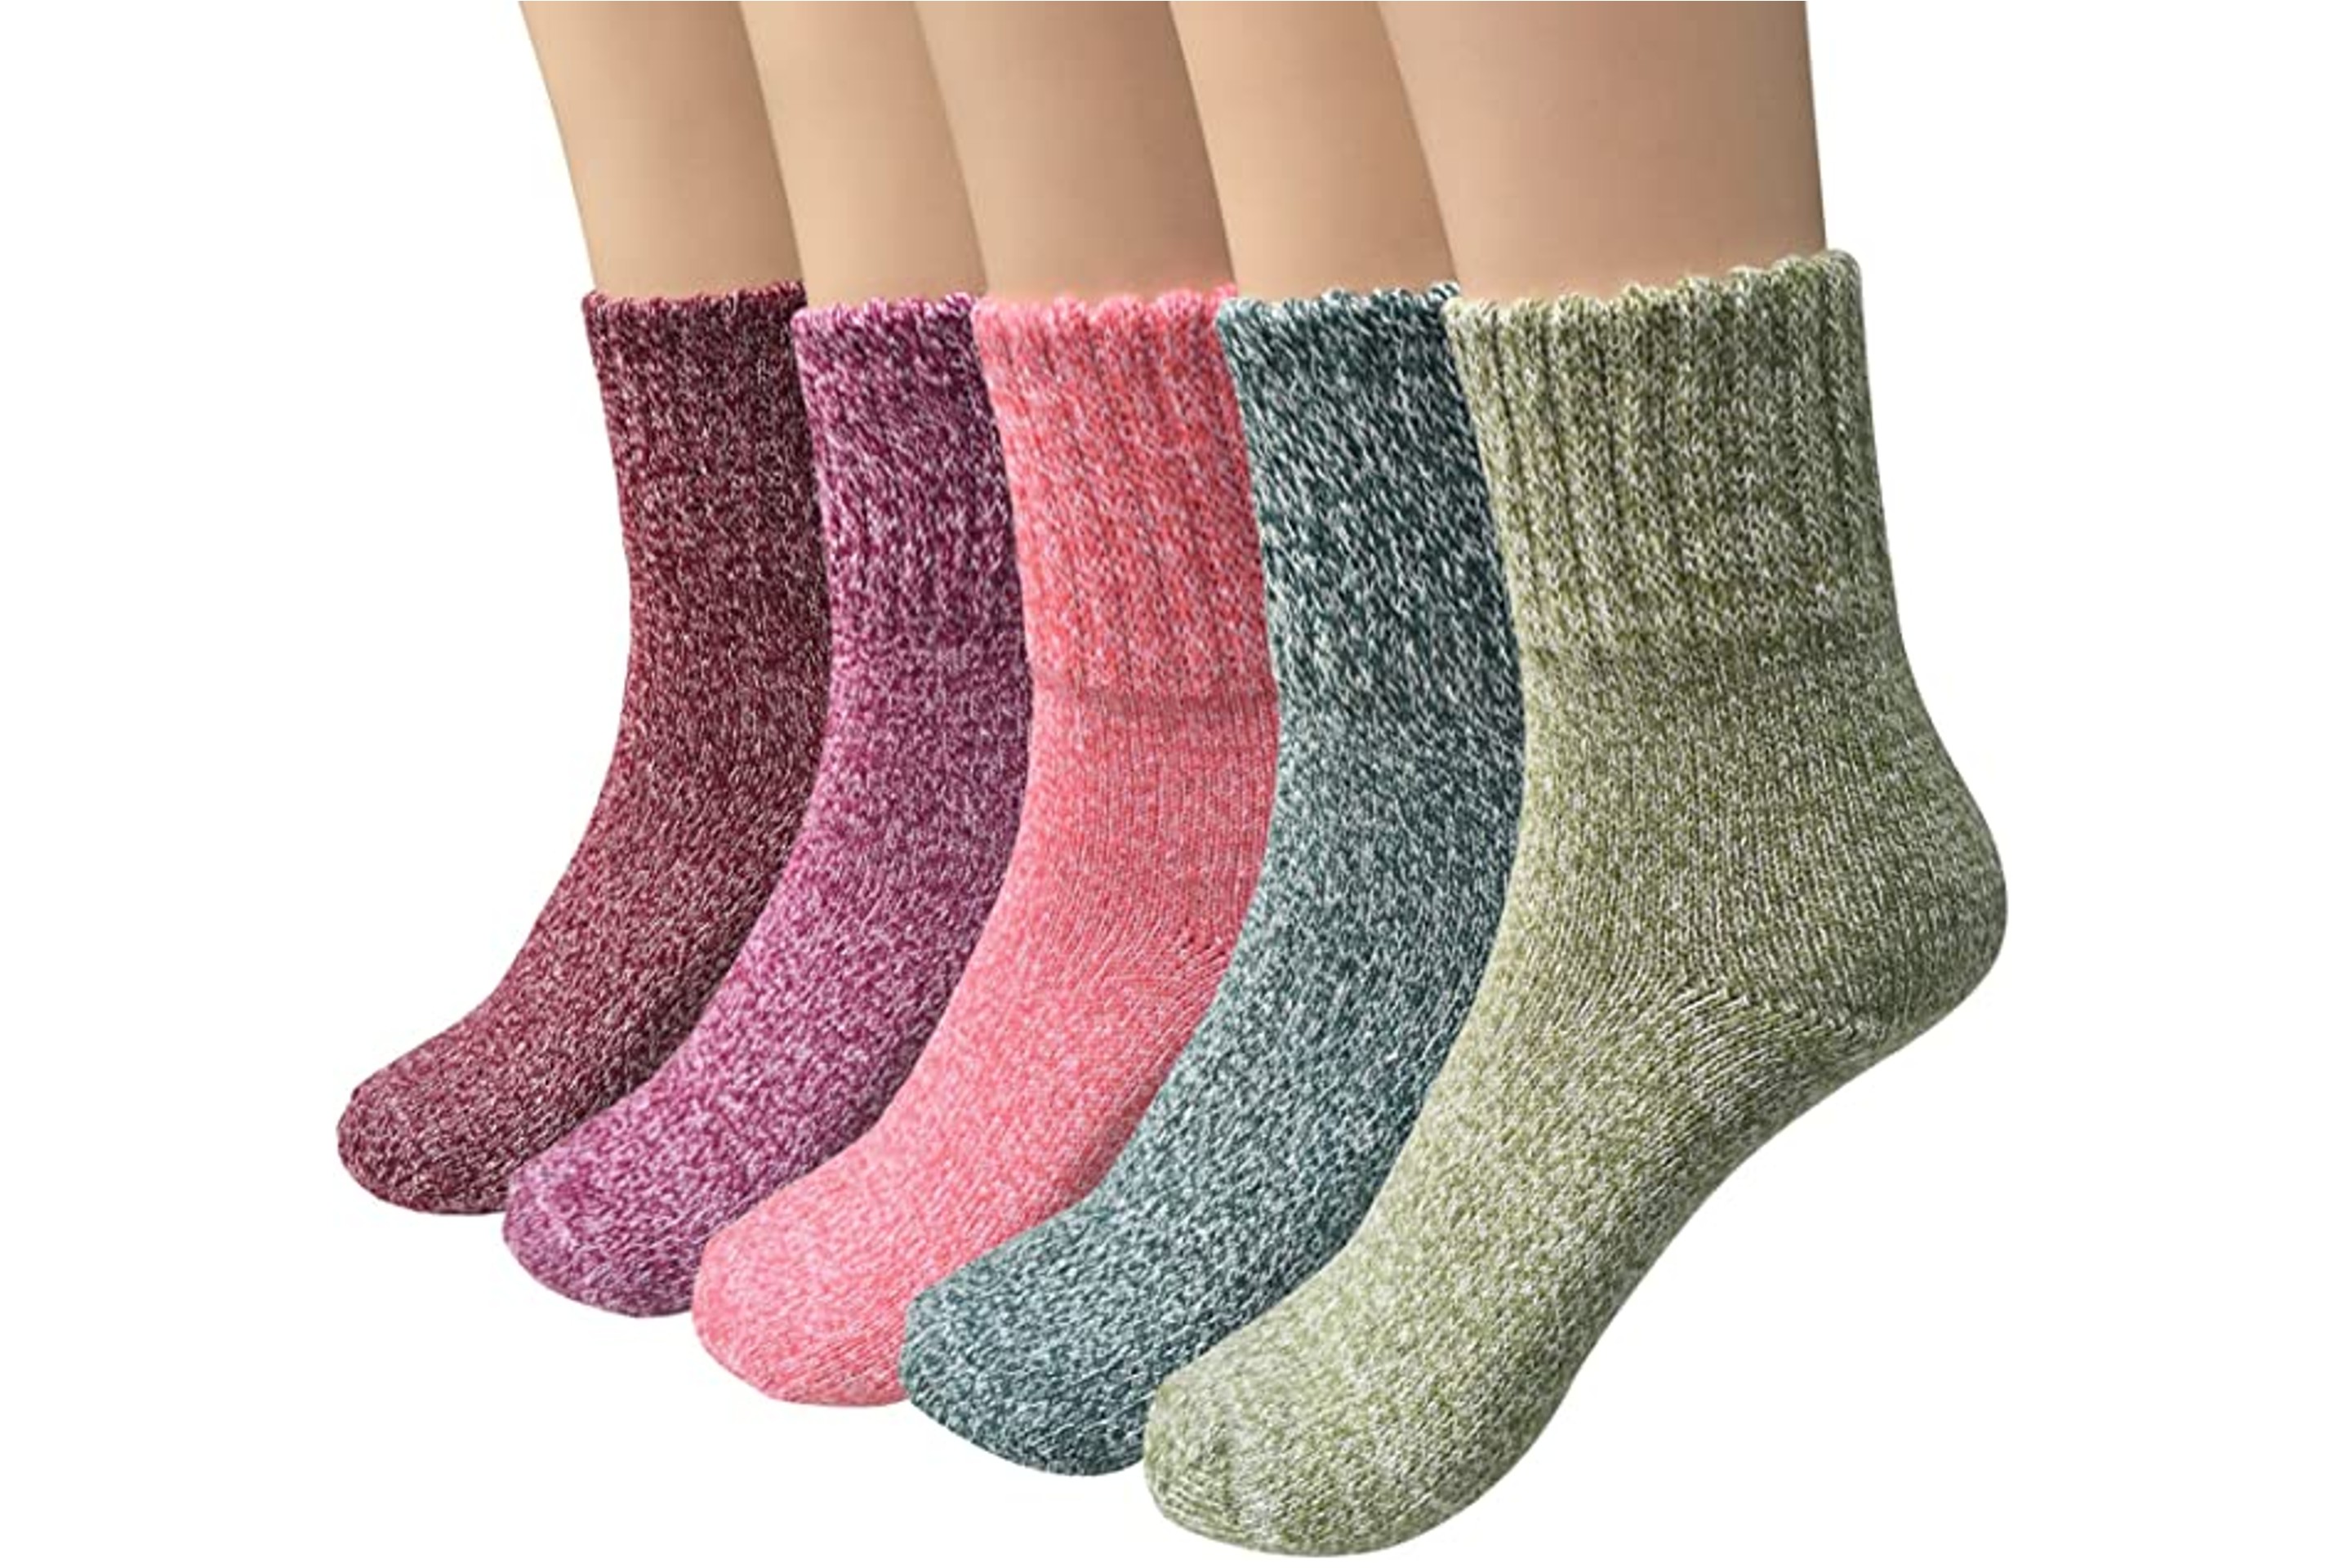 Loritta Womenâs Wool Socks, 5 Pairs